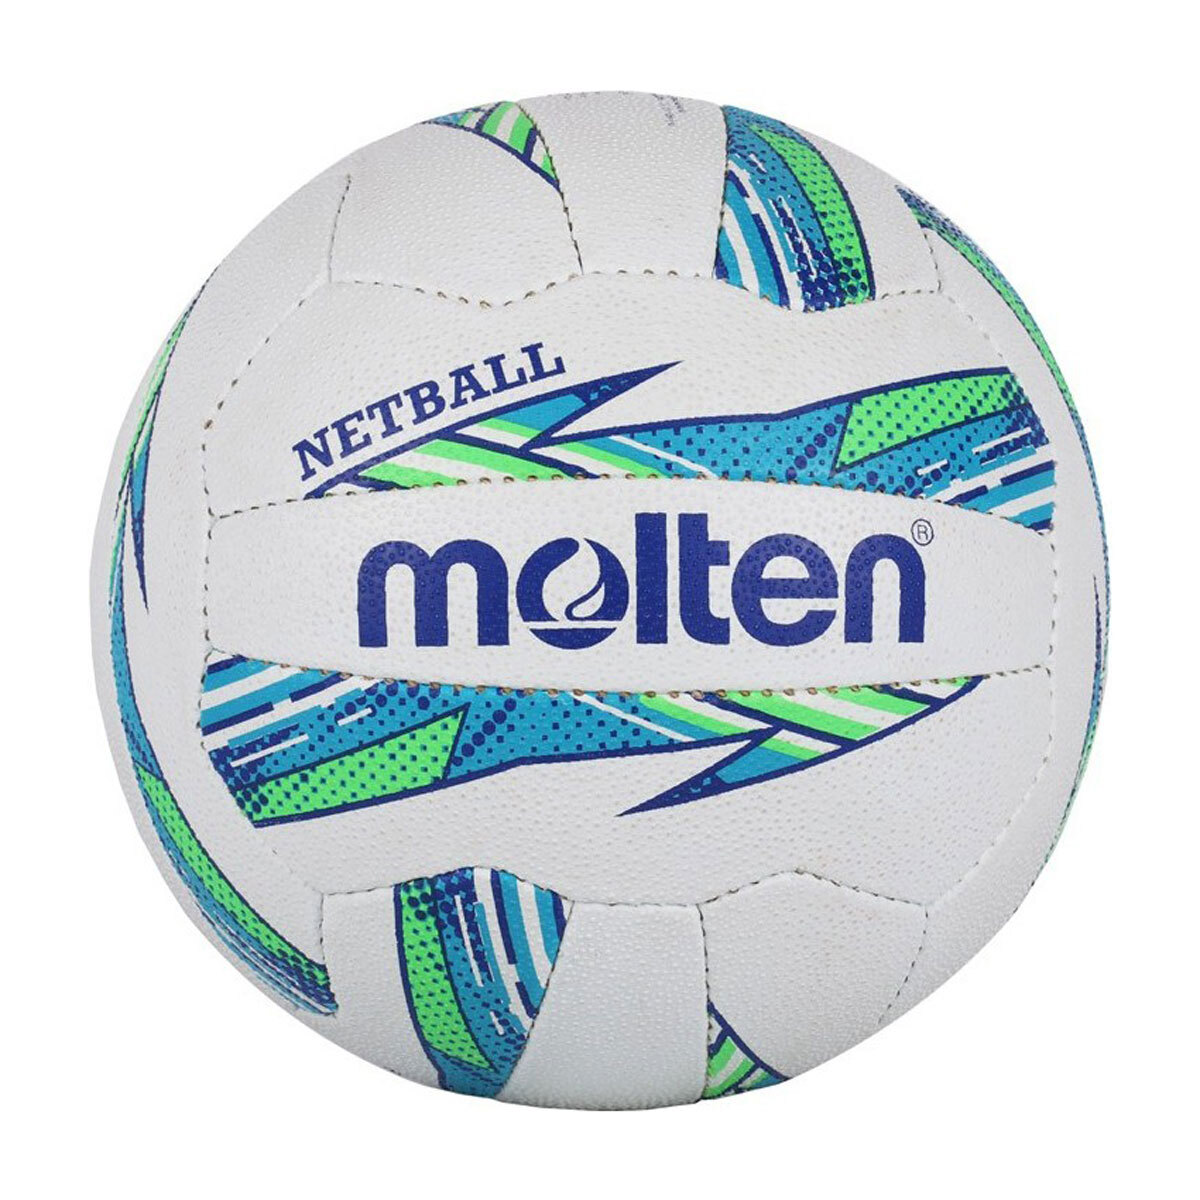 Lead Image for Molten Maestro International Netball